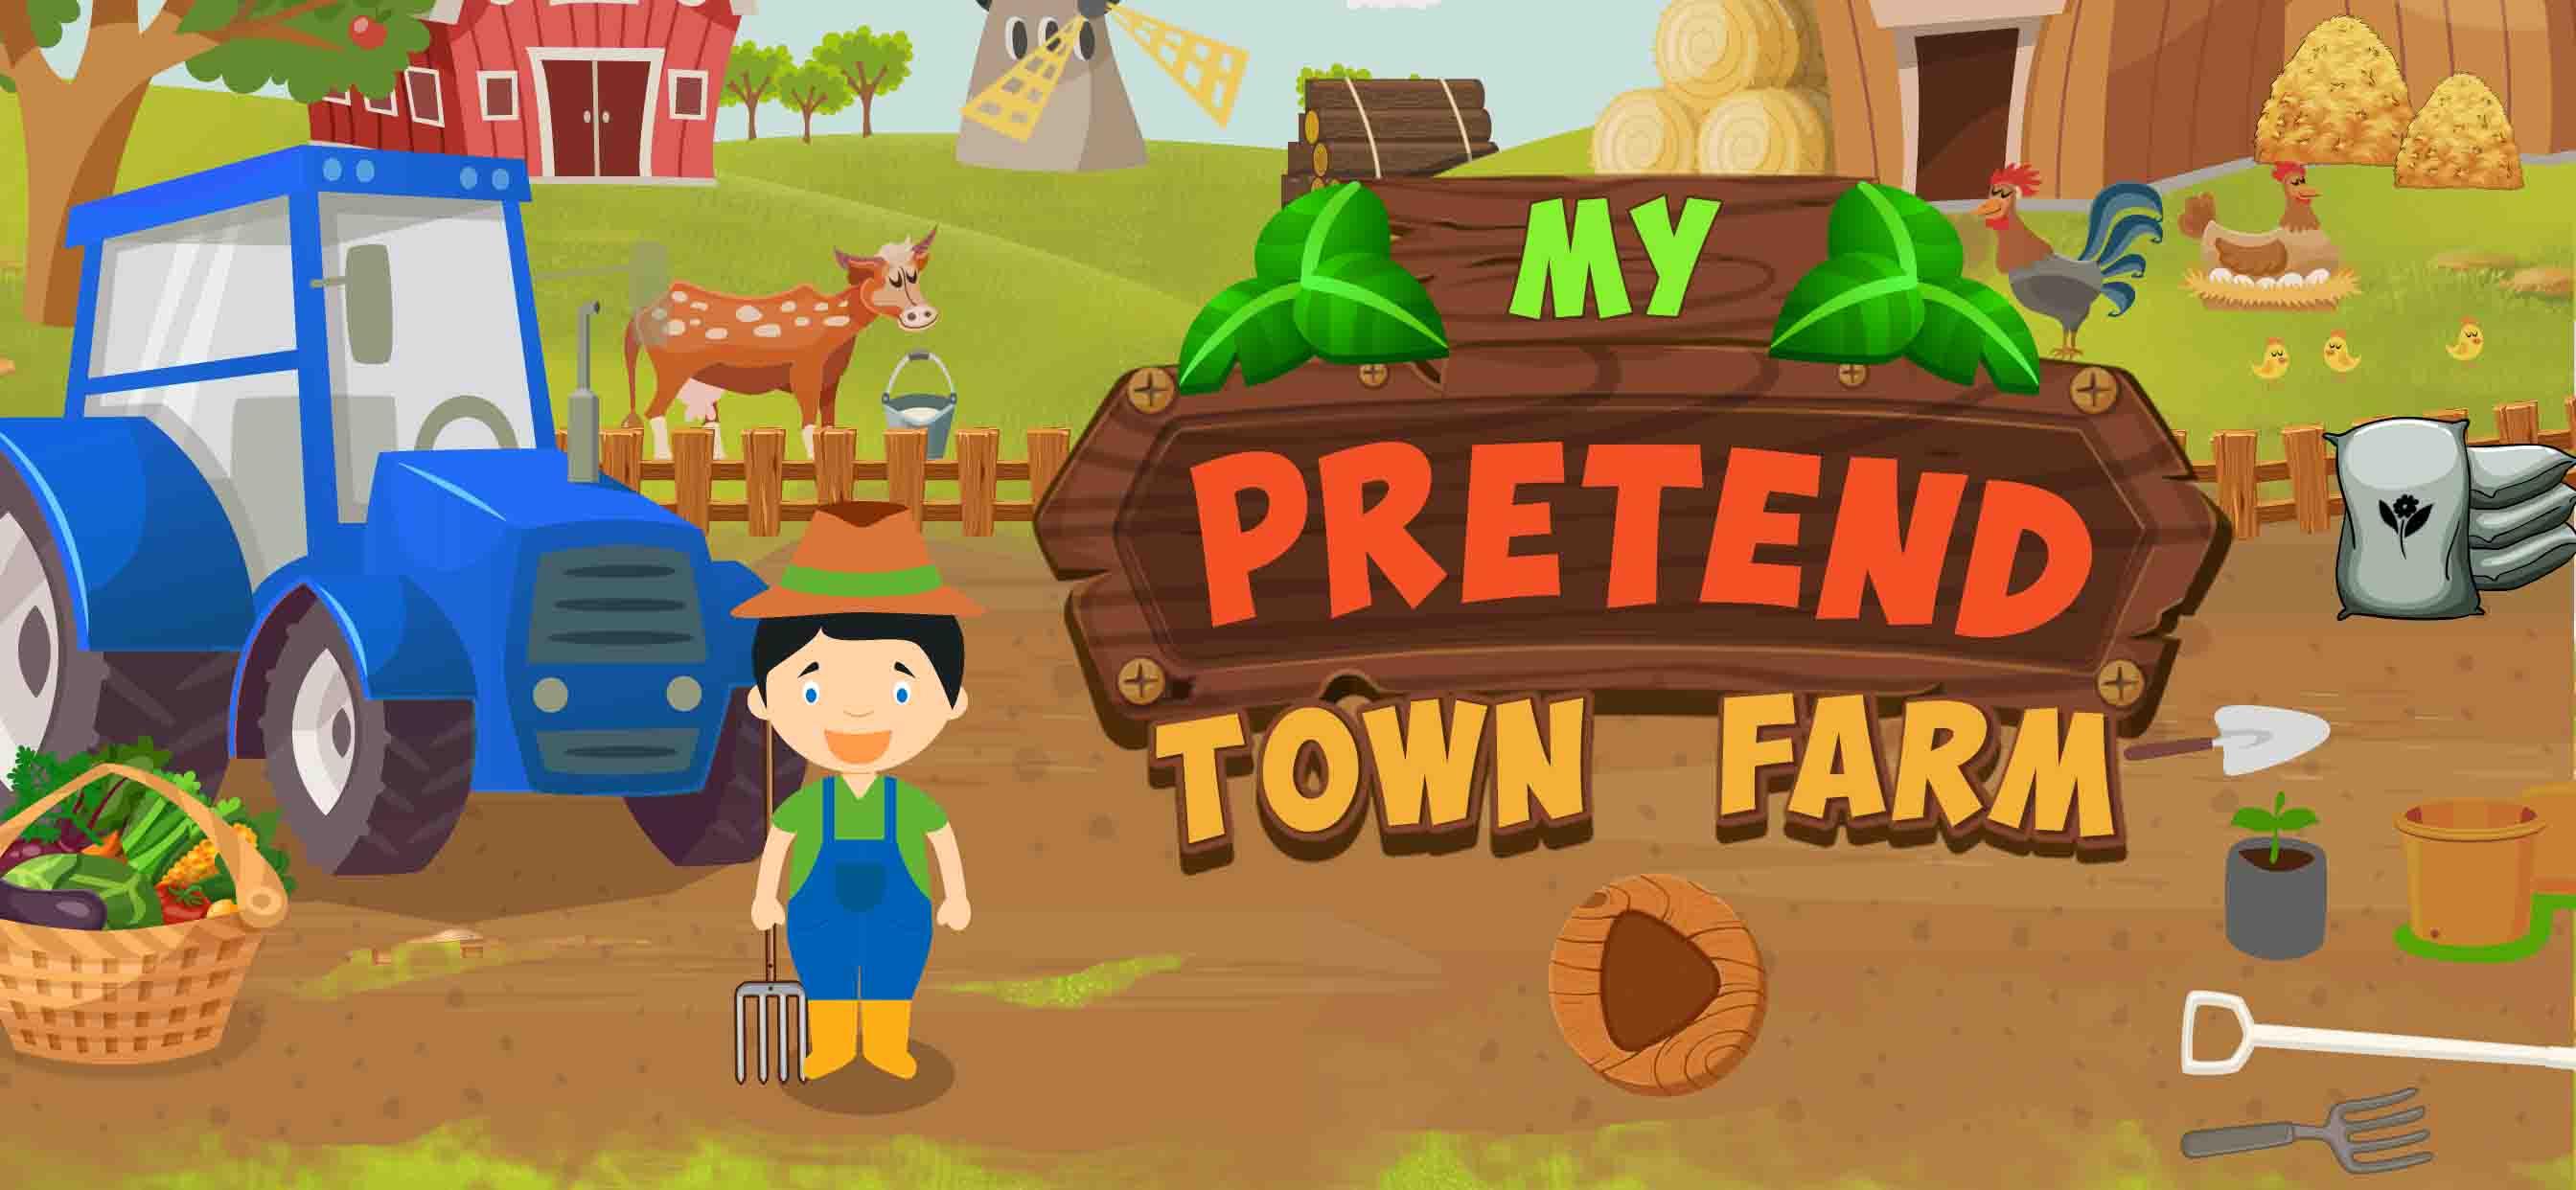 Pretend Town Farm House: Explore Farming World 1.1 Screenshot 17